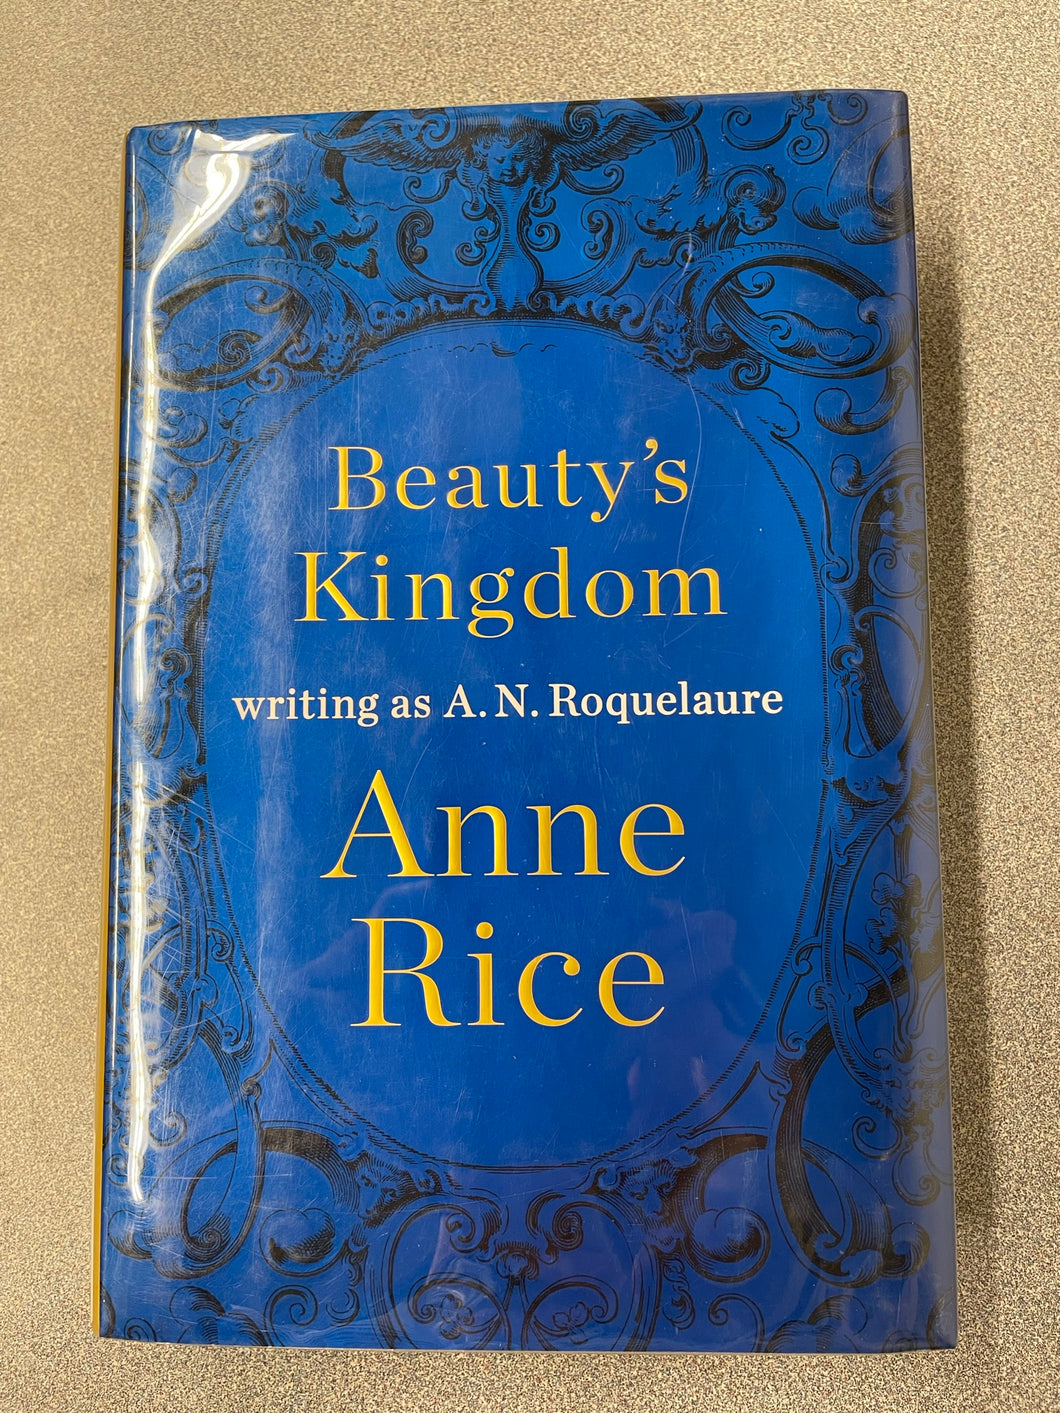 Roquelaure, A. N. (Rice, Anne),  Beauty's Kingdom [2015] ER 4/23